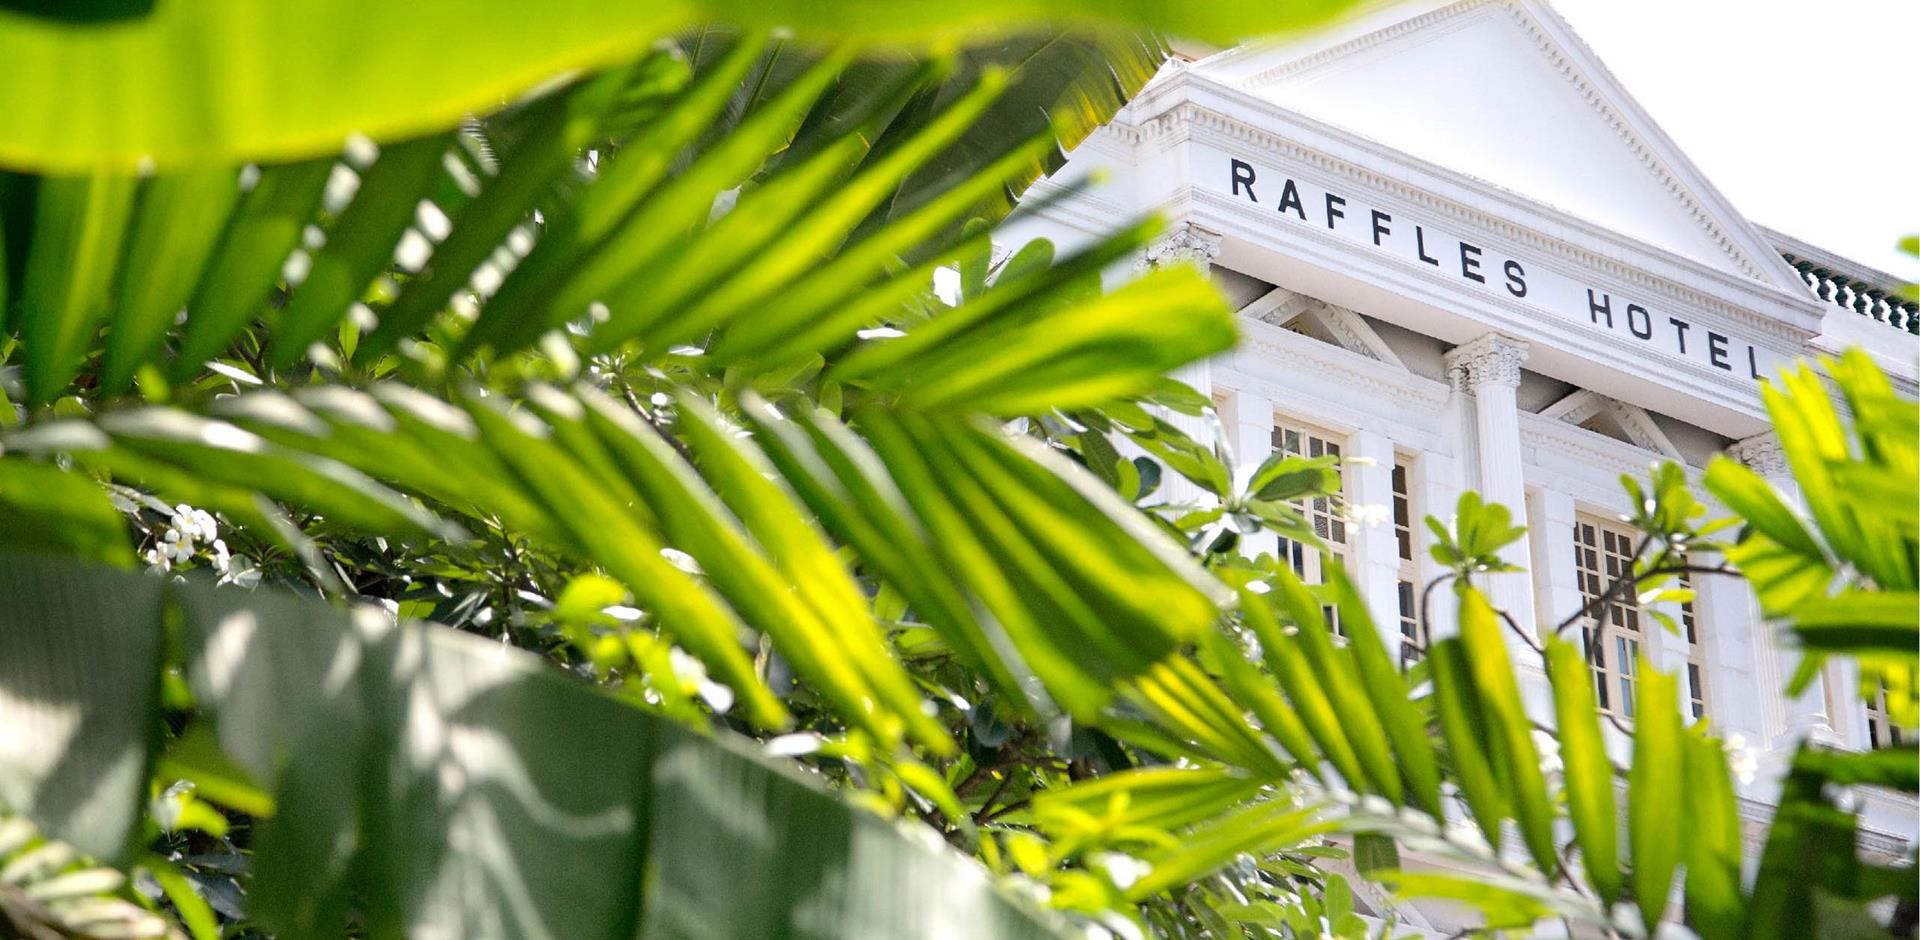 Raffles Hotel, Singapore, Abercrombie & Kent